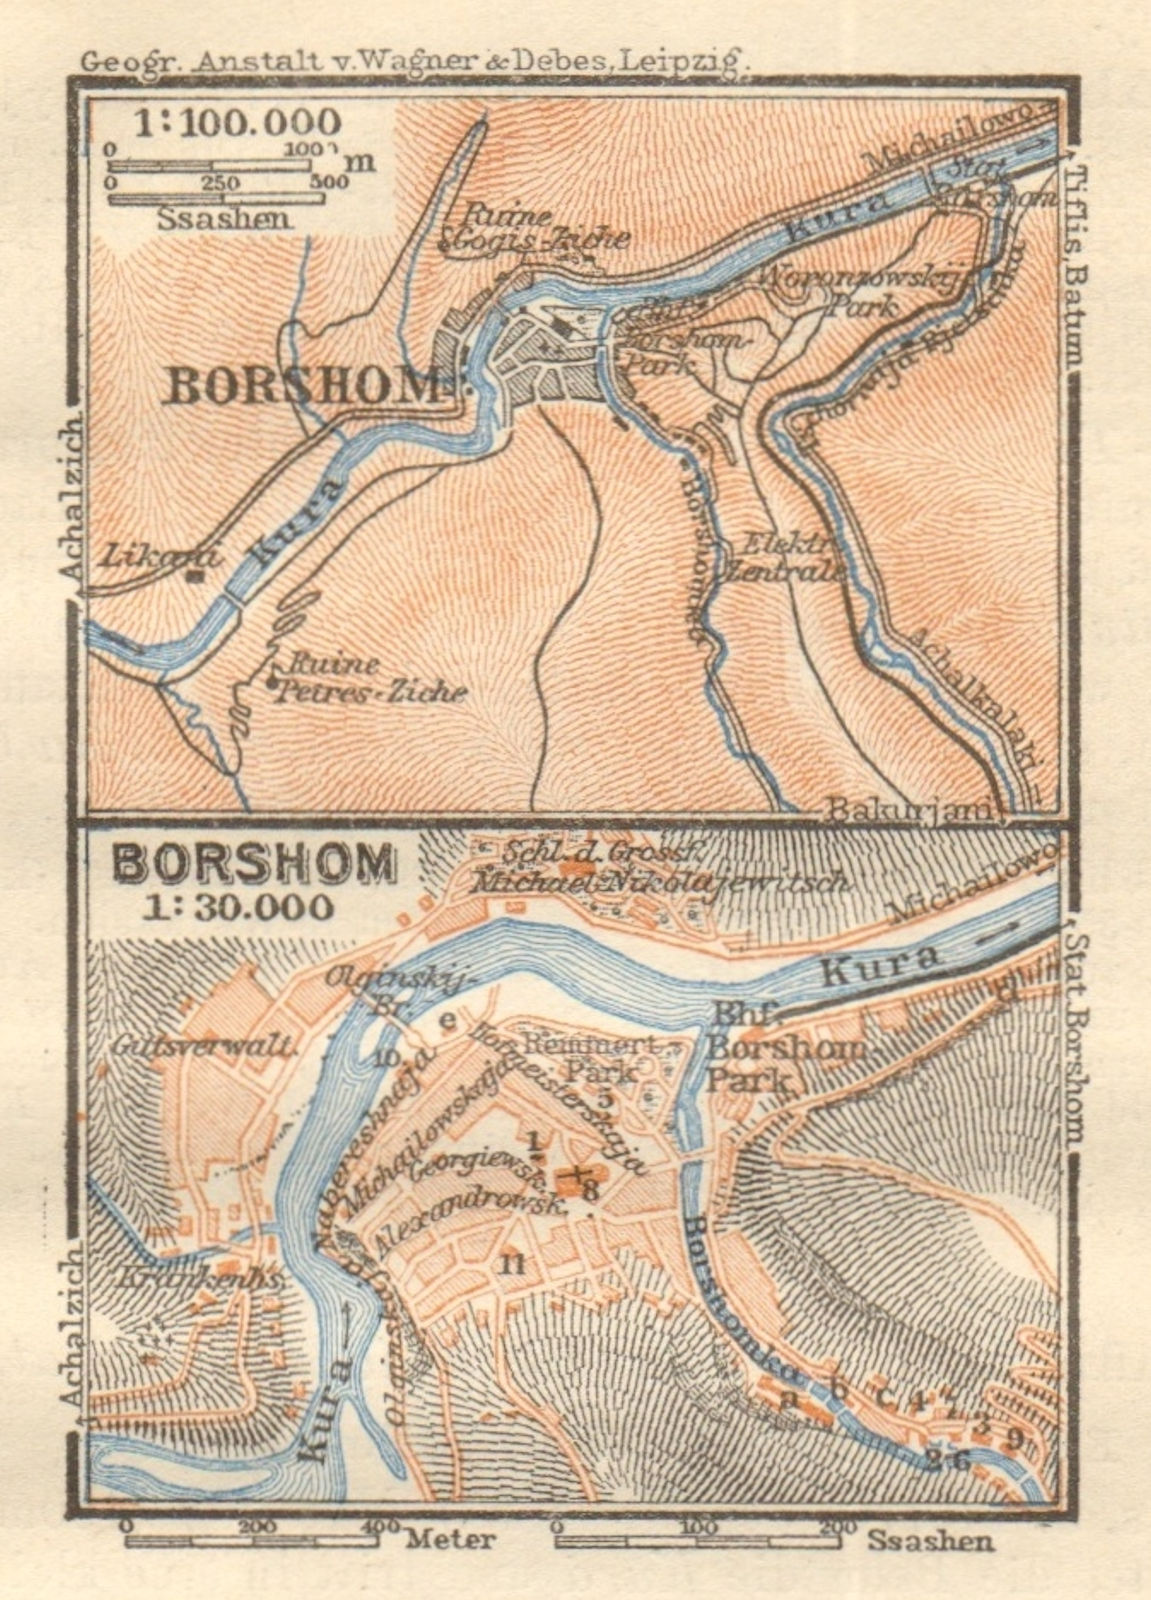 Borjomi (Borshom) town/city plan. Georgia. VERY SMALL. BAEDEKER 1912 old map